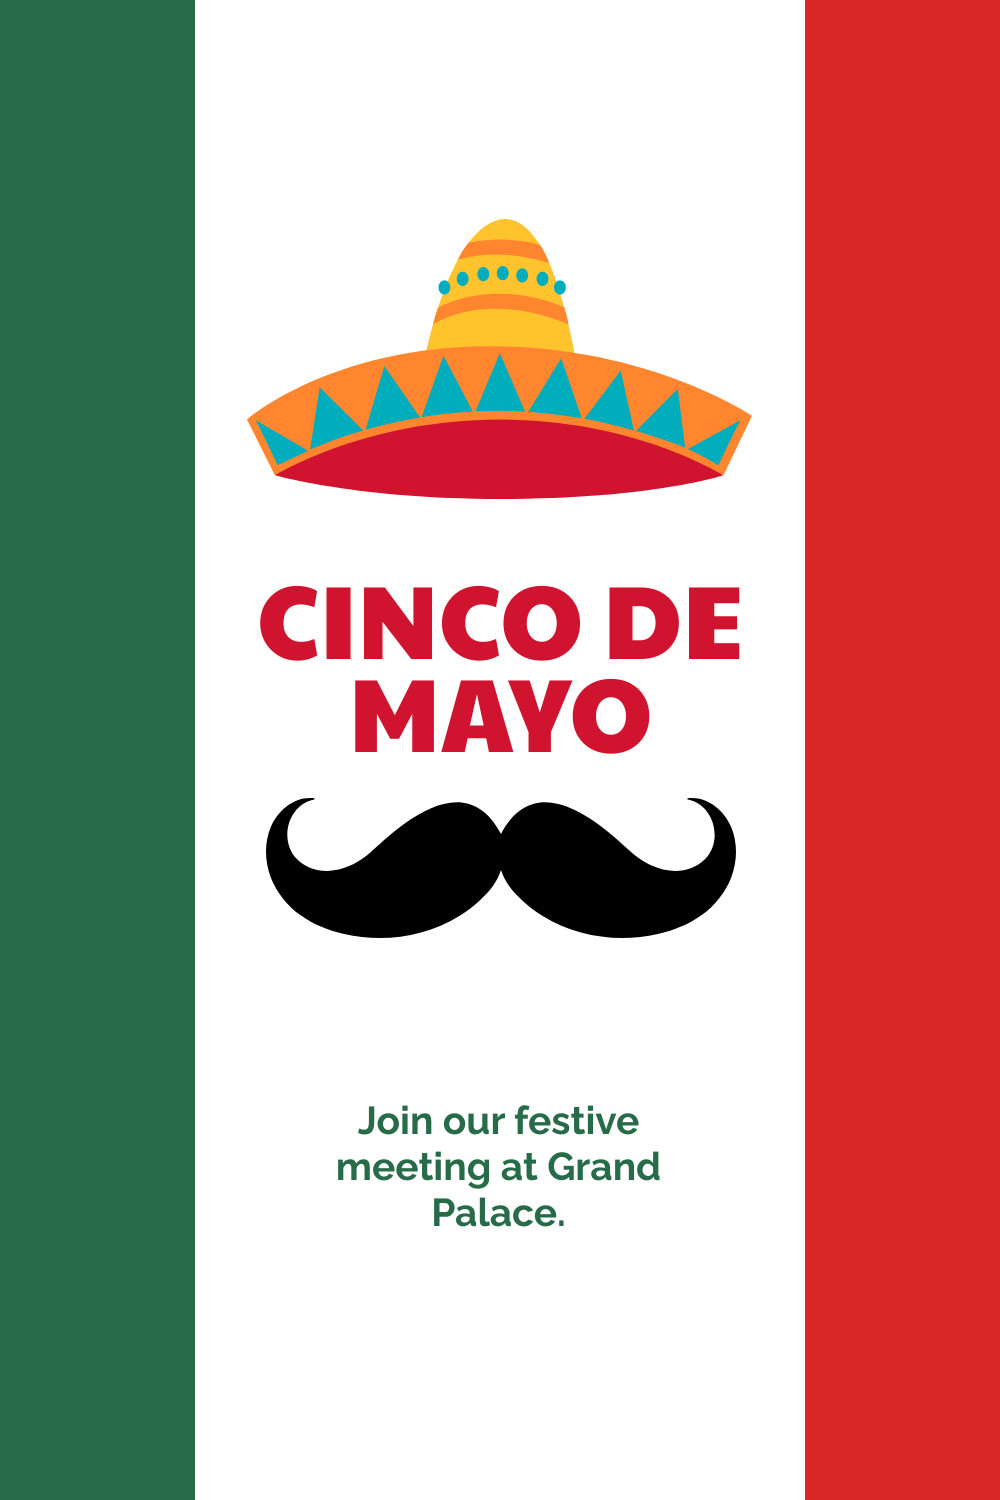 Cinco de Mayo Mexican Festive Meeting